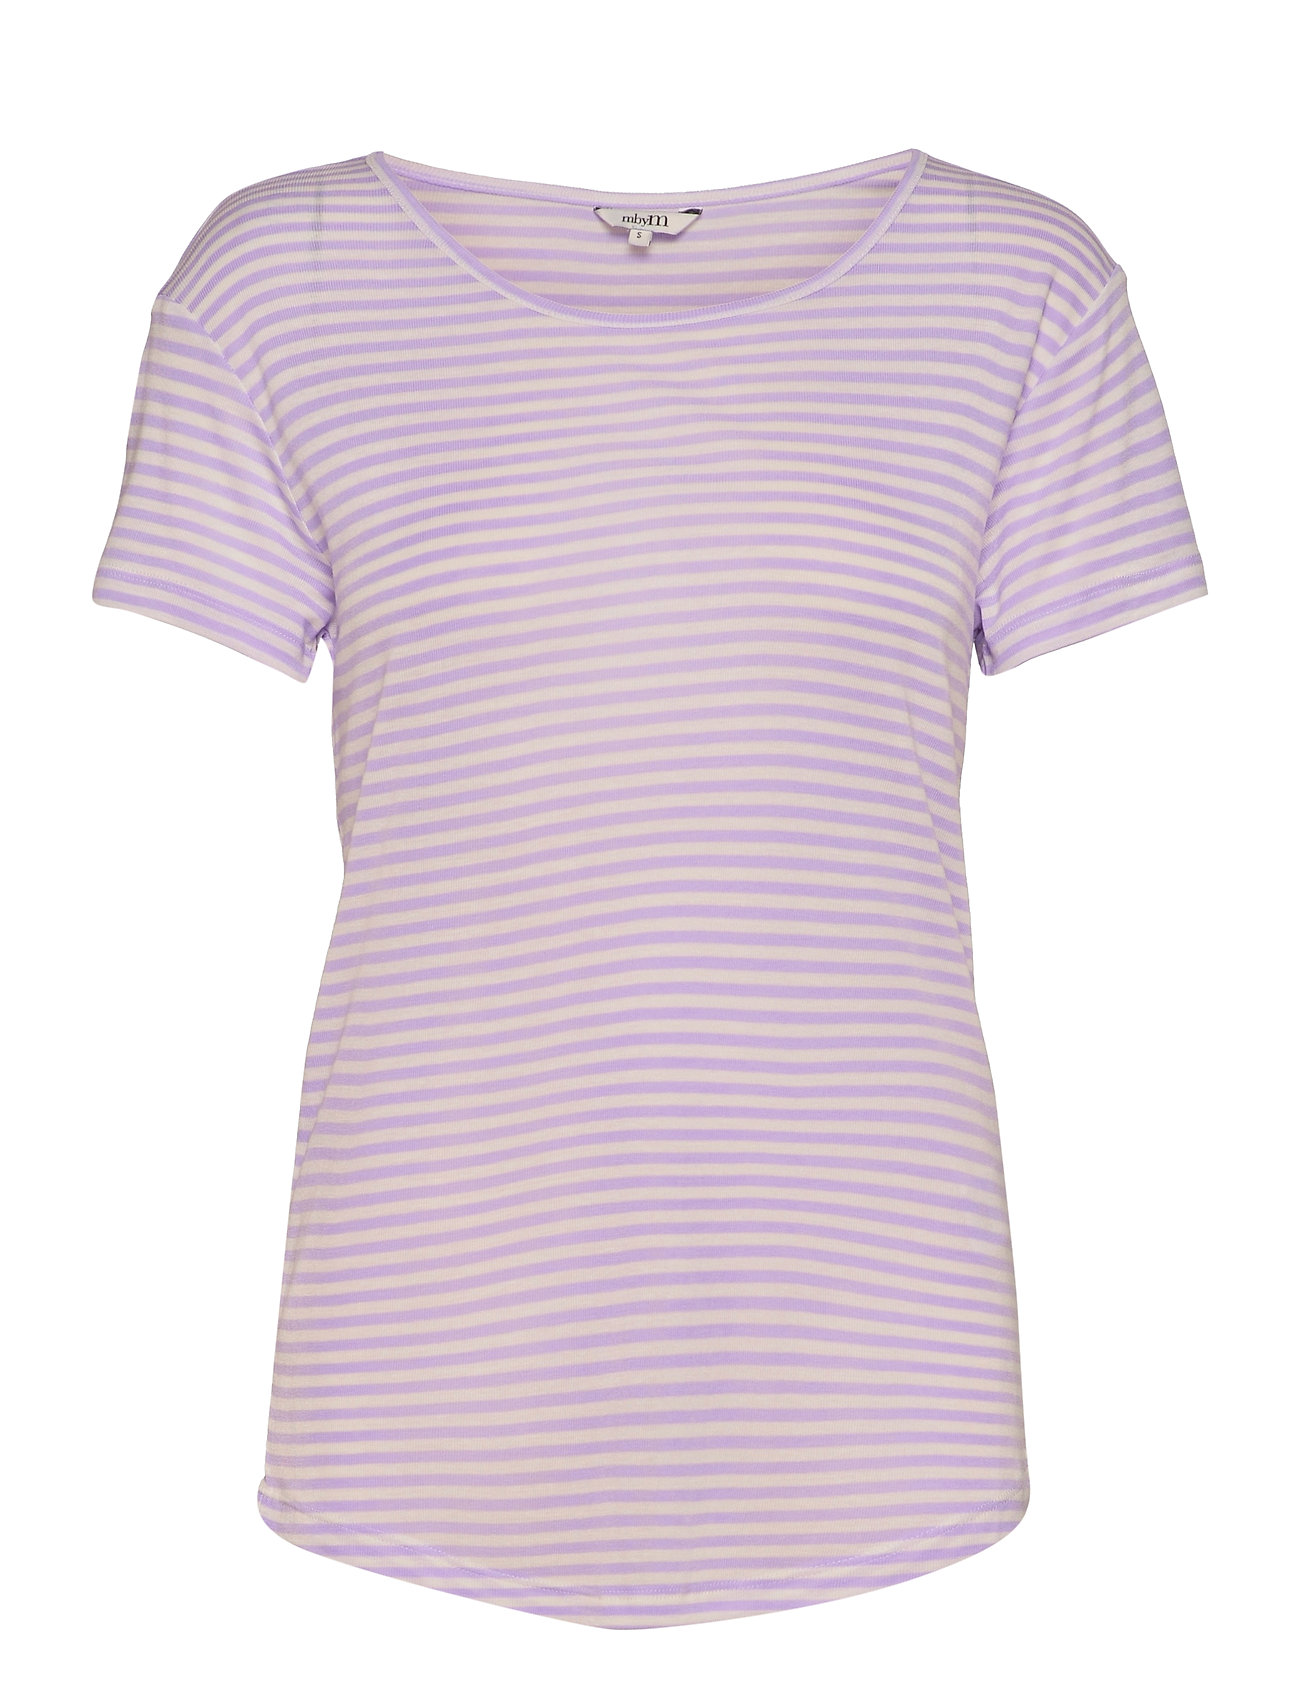 Lucianna T-shirts & Tops Short-sleeved Liila MbyM, mbyM